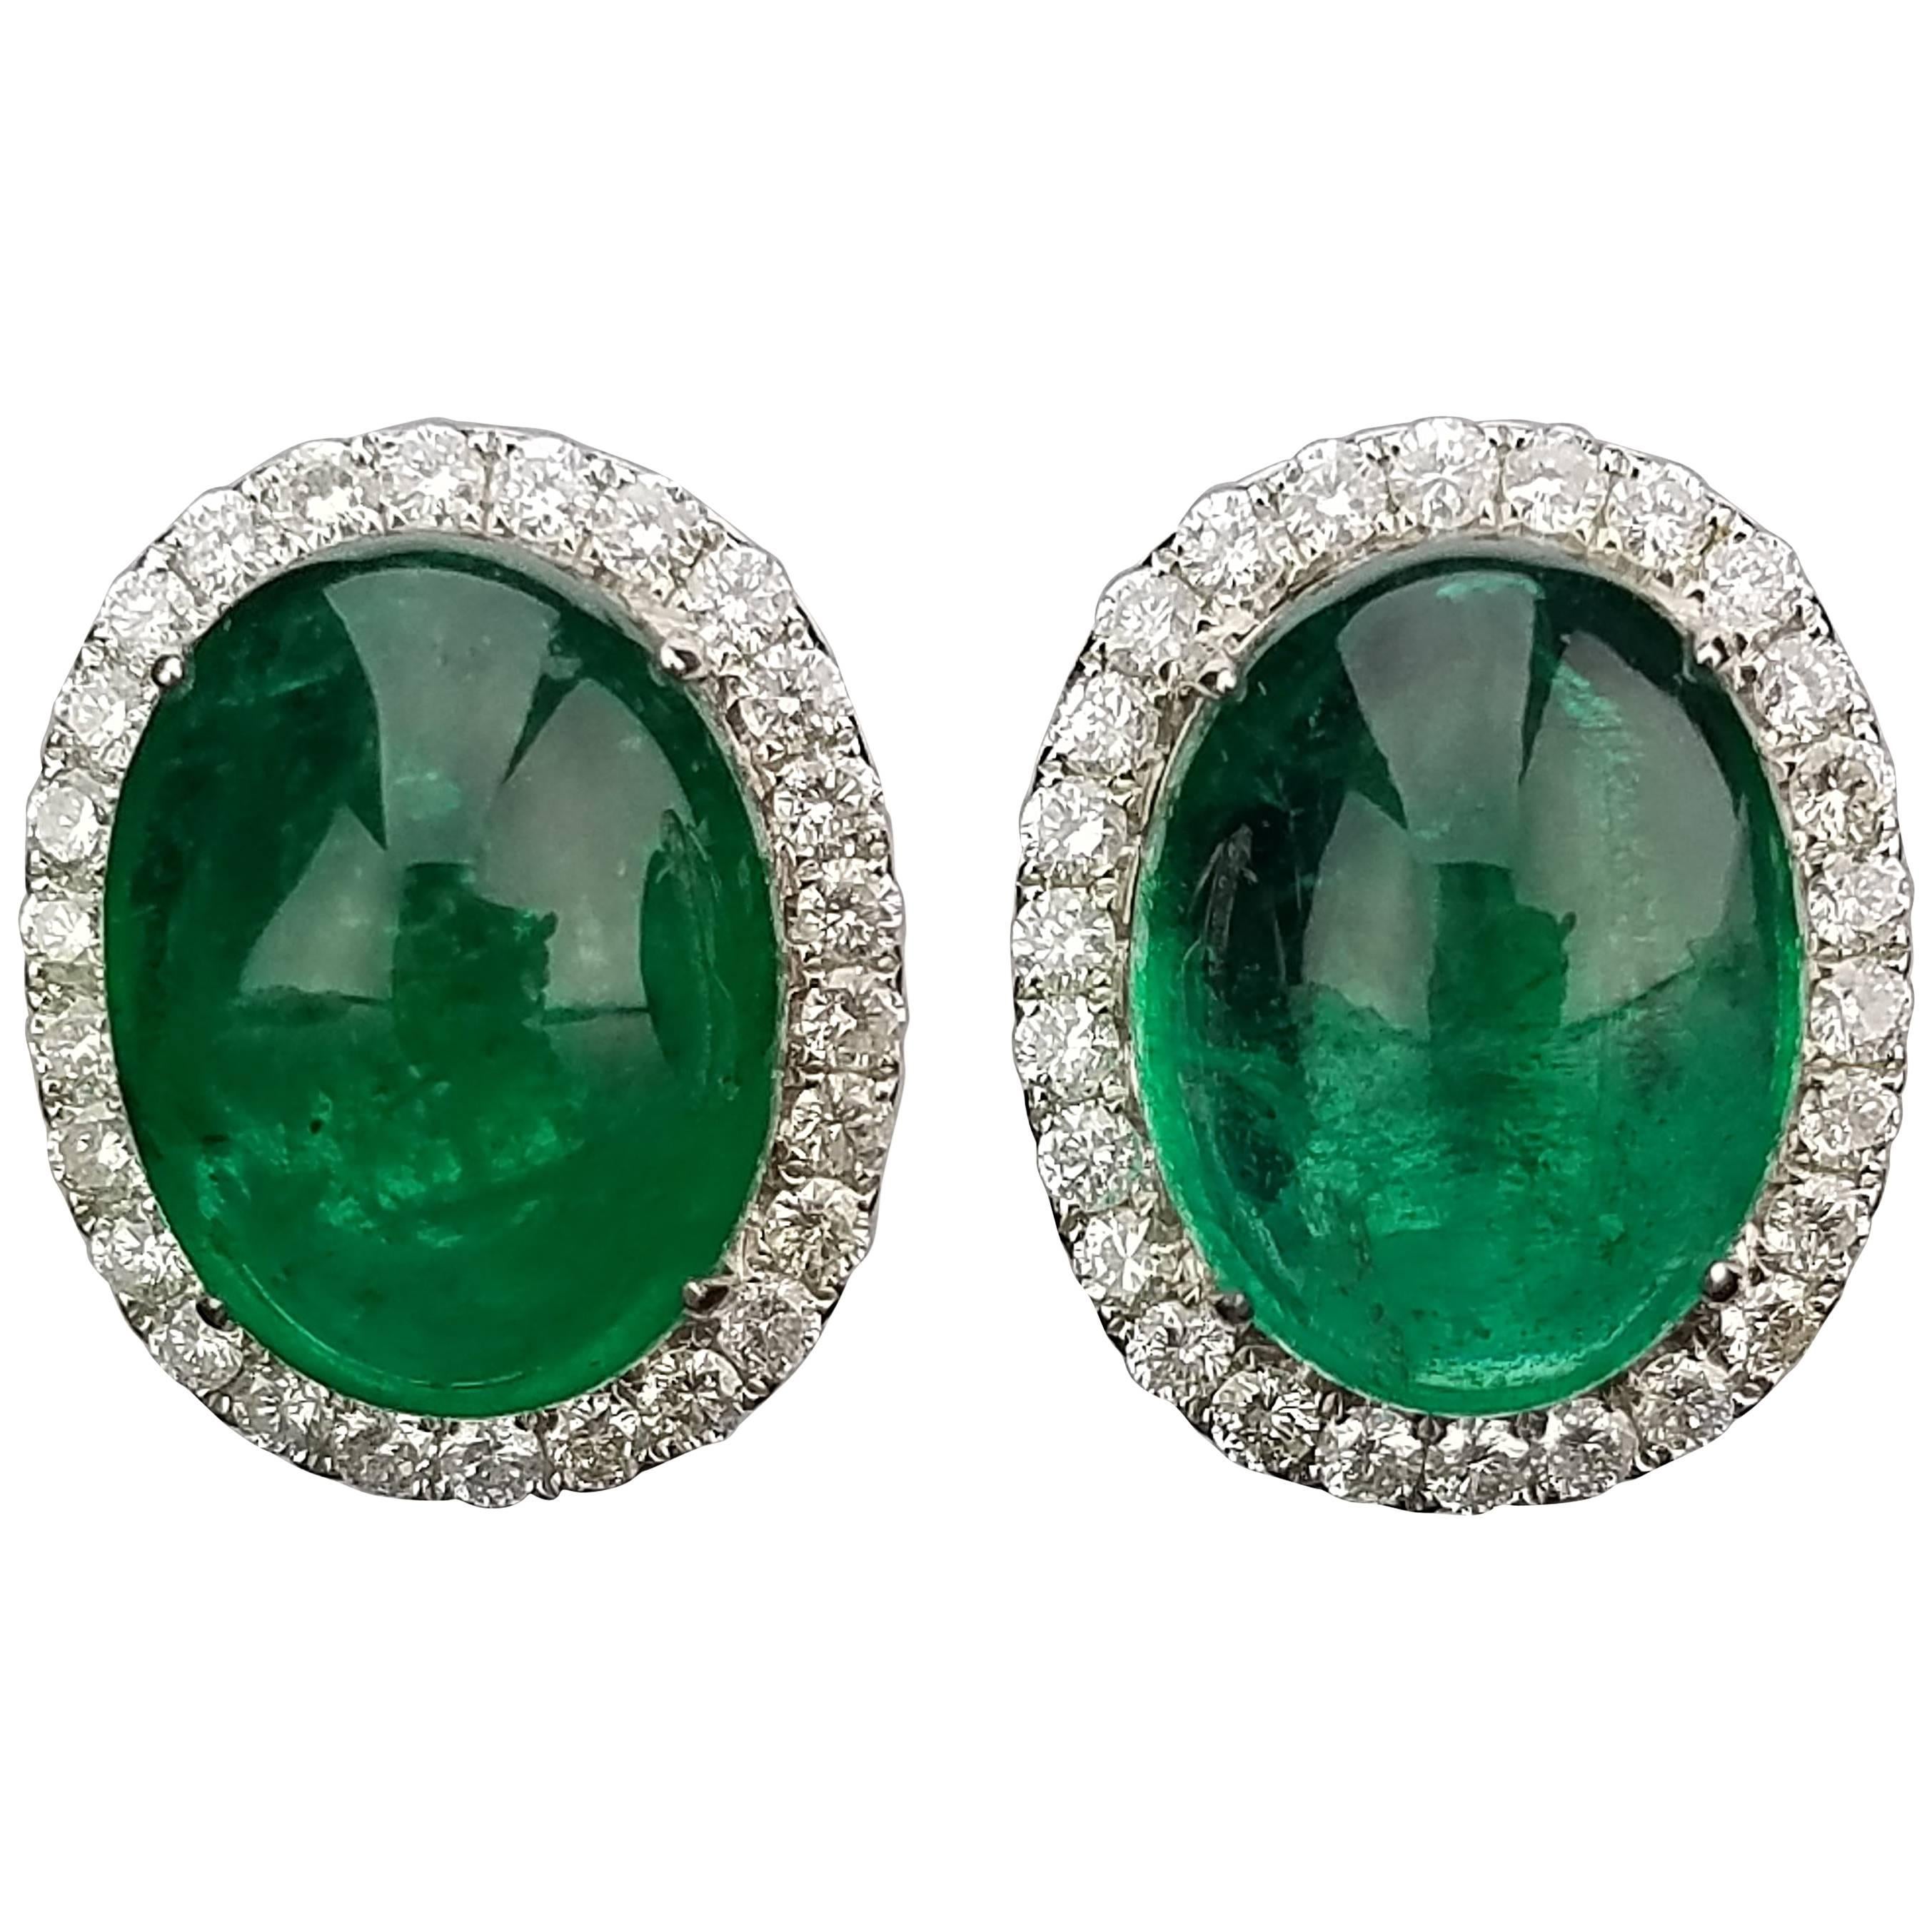 21.36 Carat Zambian Emerald Cabochon and Diamond Studs Earring For Sale